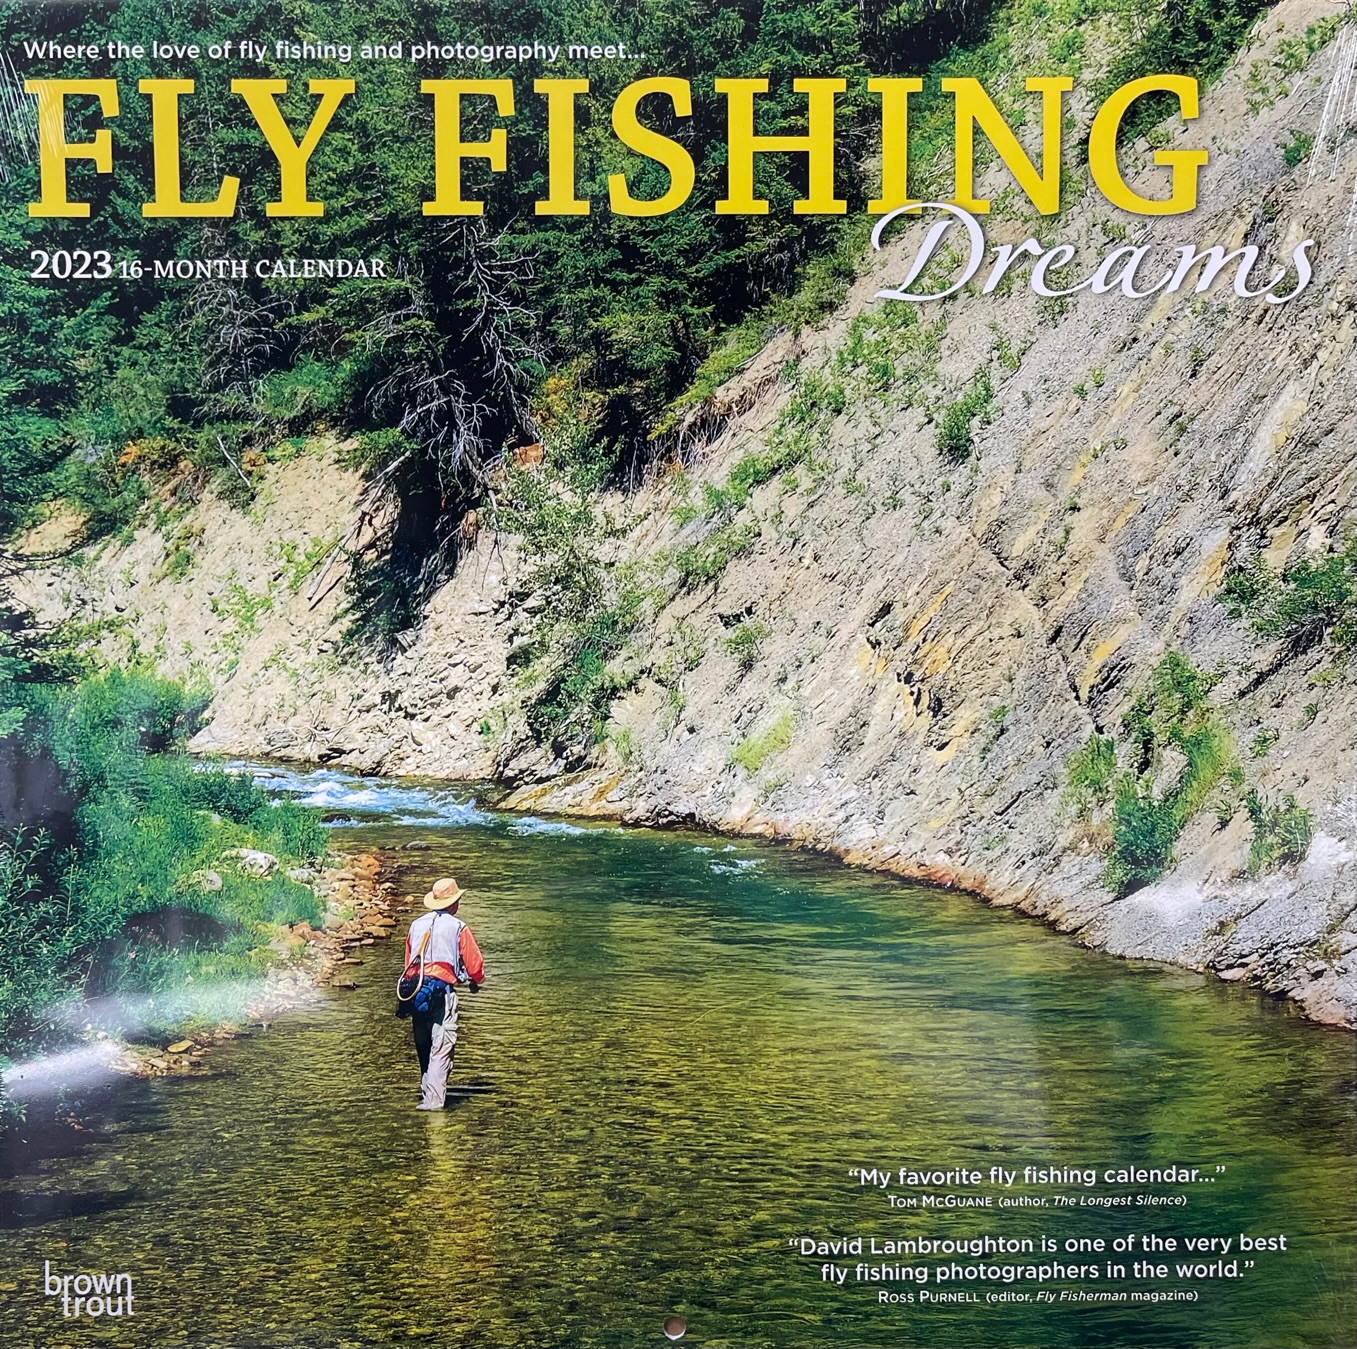 Fly Fishing Dreams 16-Month Calendar 2023